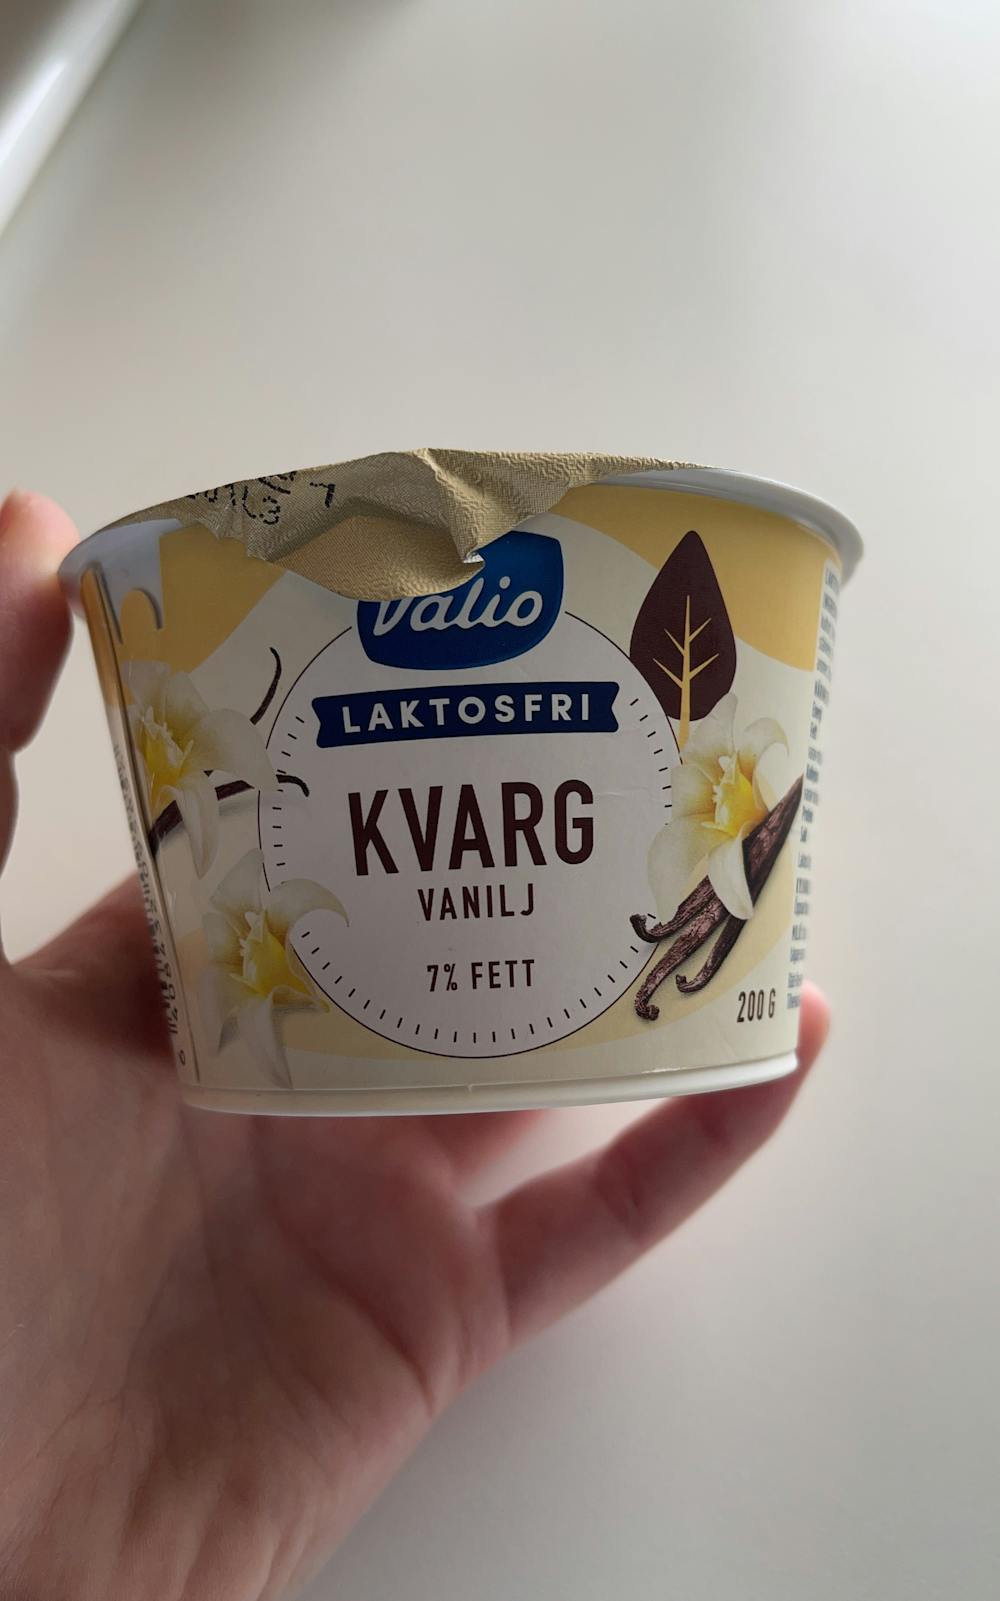 Kvarg vanilj, laktosefri, Valio